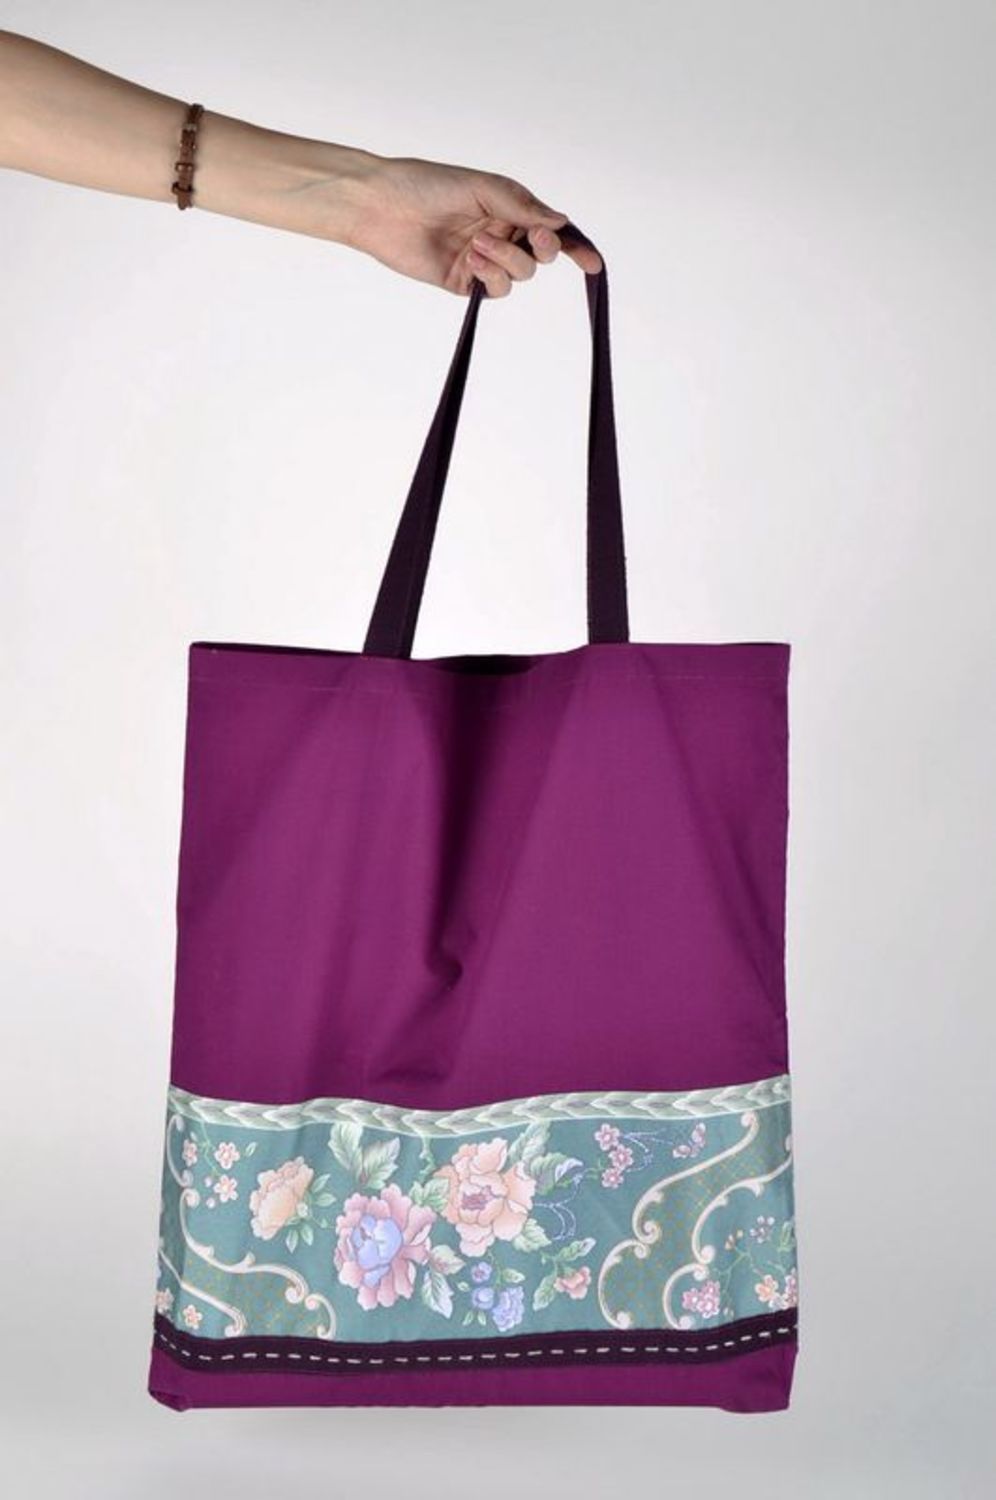 Large women's handbag, fabric eco-friendly bags  photo 5